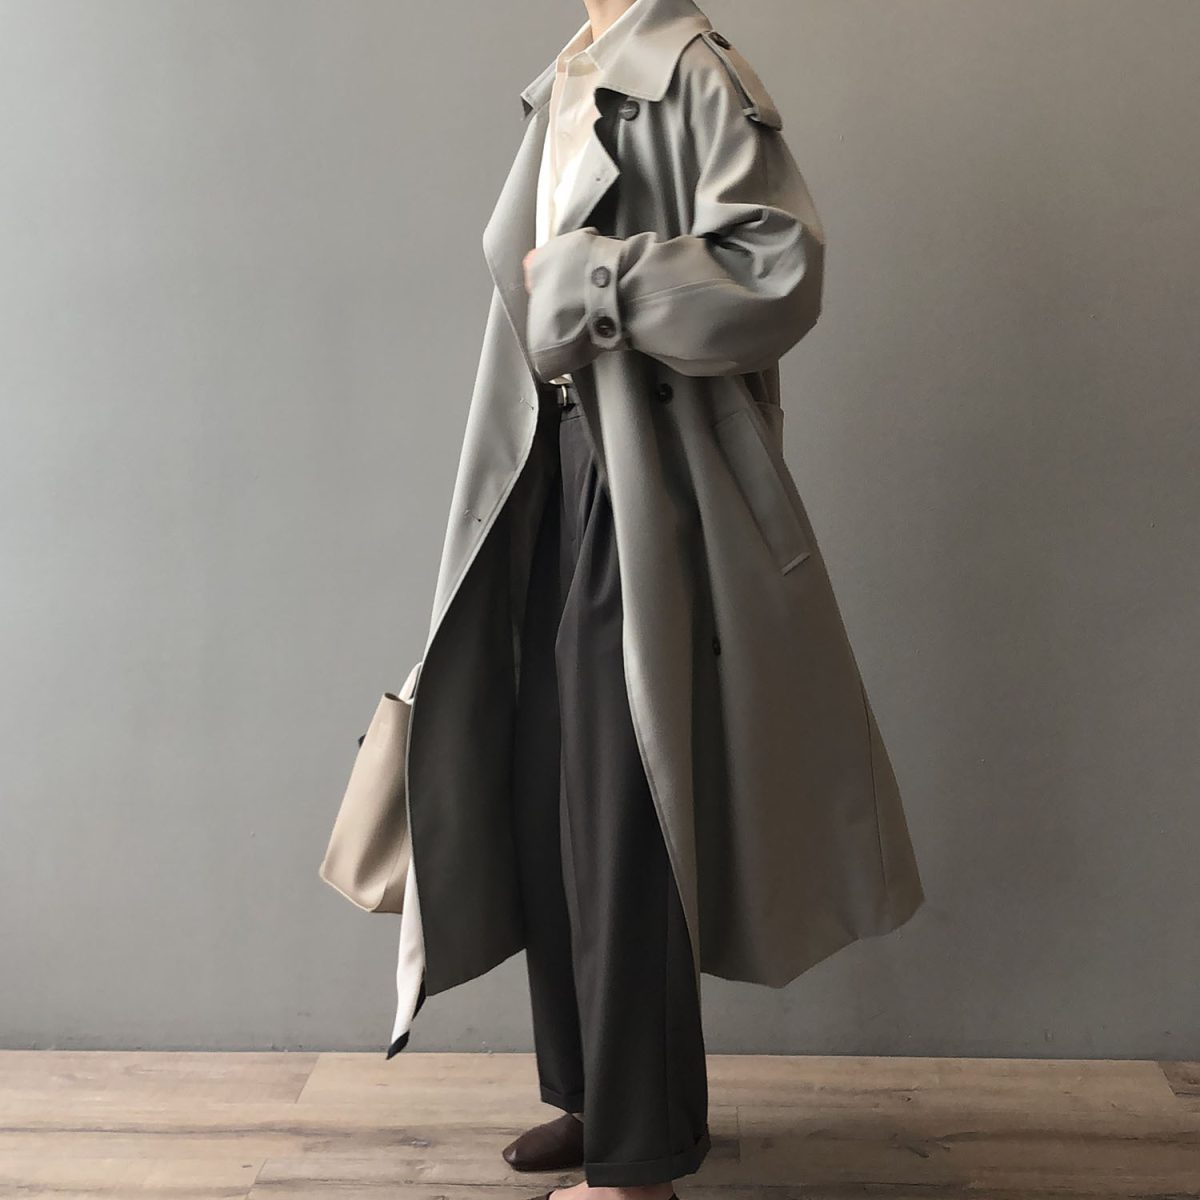 Korean Elegant Loose Waist Tight Slimming Casual Coat in Coats & Jackets